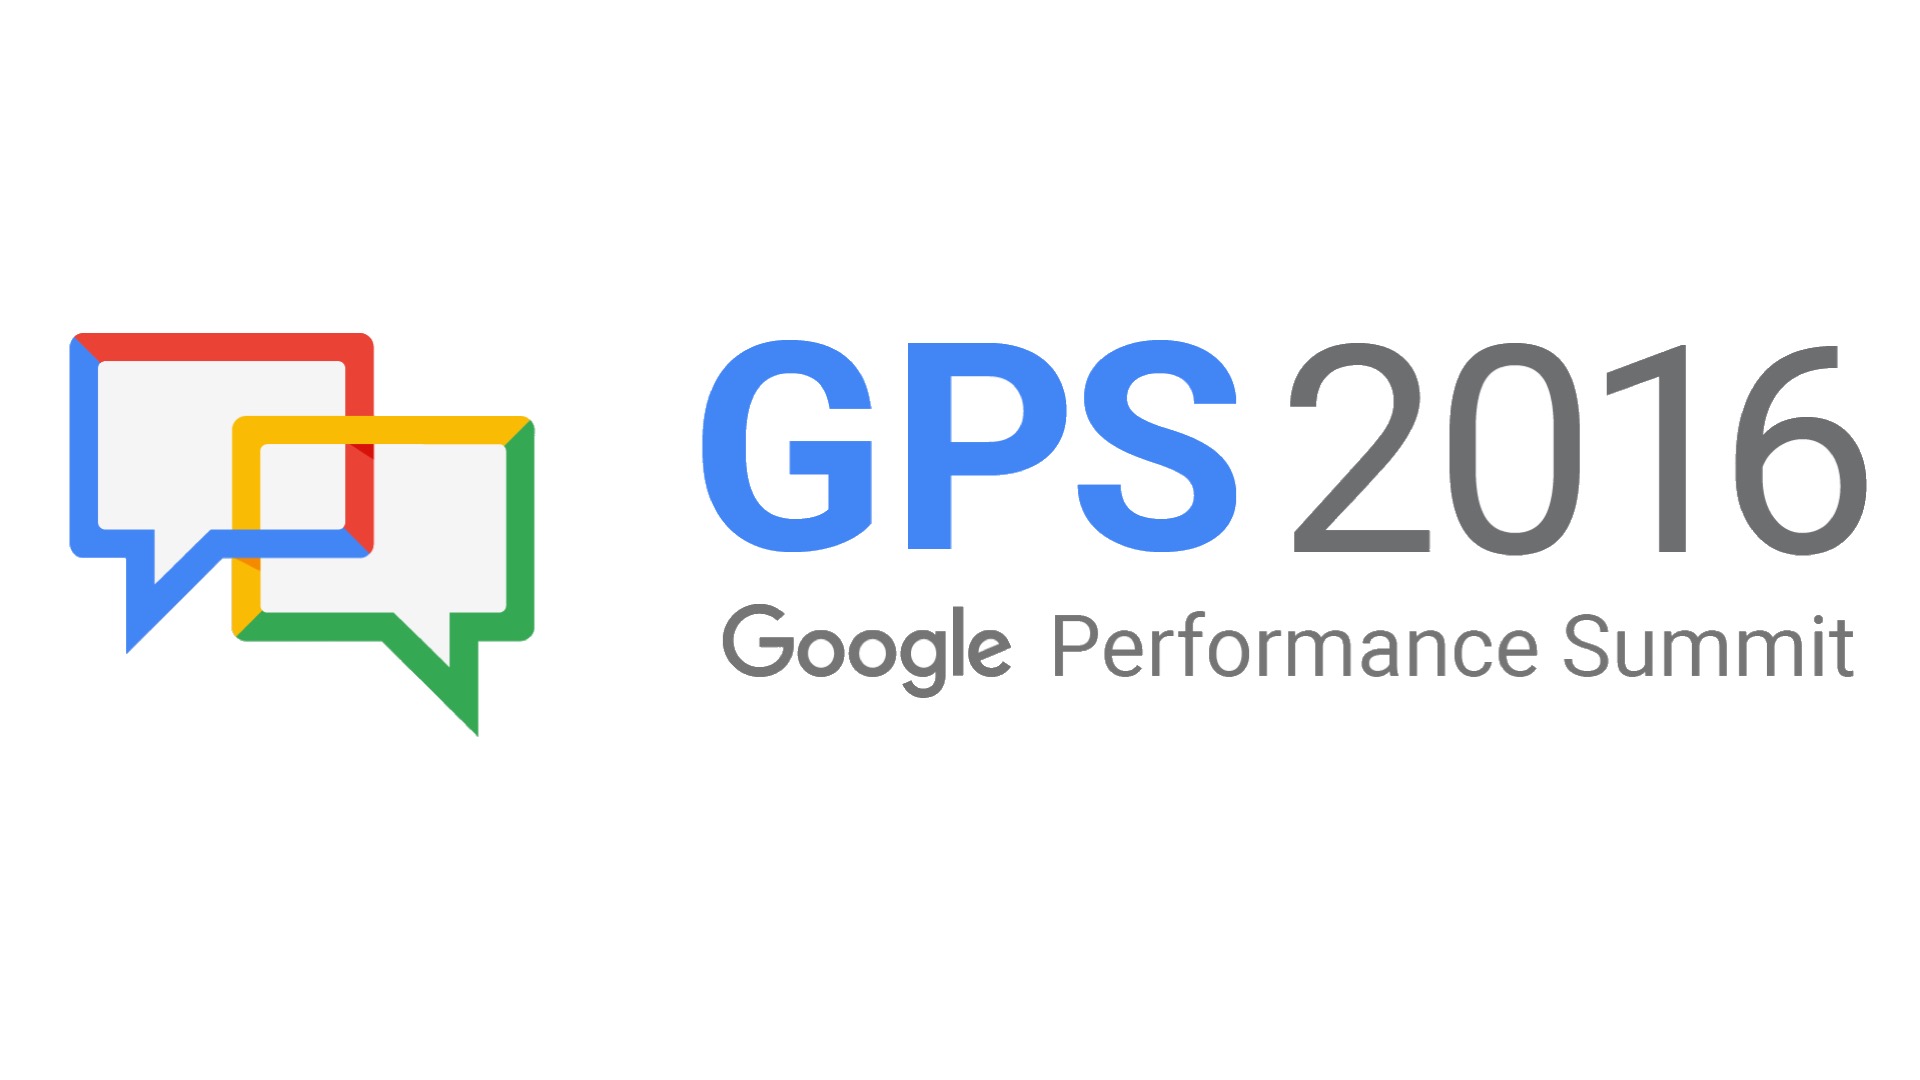 AdWords & Google Analytics Changes Announced at Google Summit